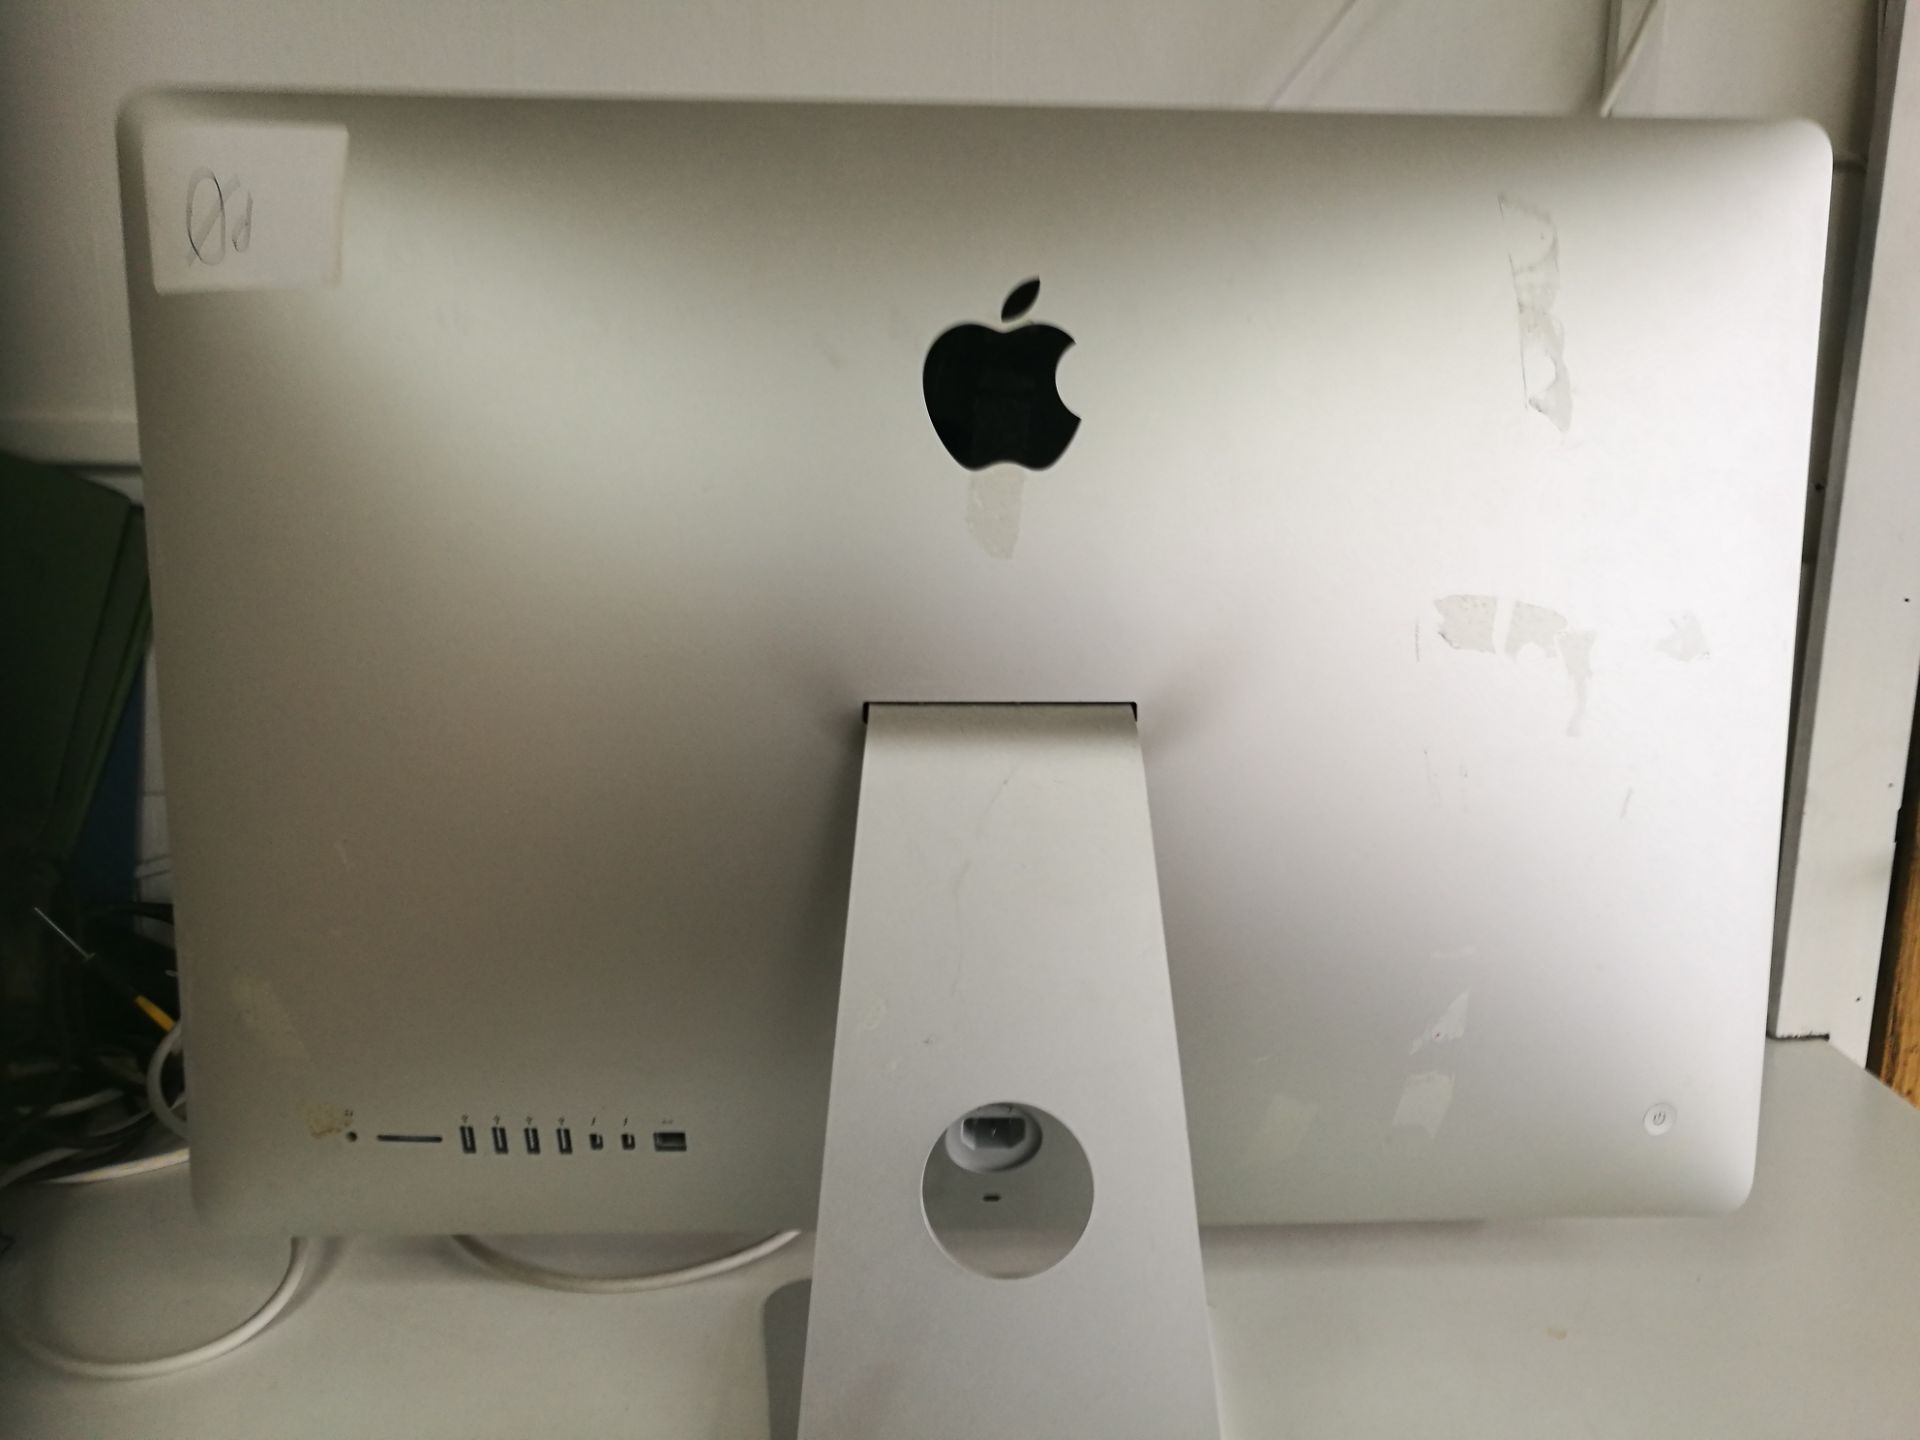 Apple iMac (Retina 5K, 27-inch, Late 2014) (with NSP Flight Bag) - Image 4 of 5